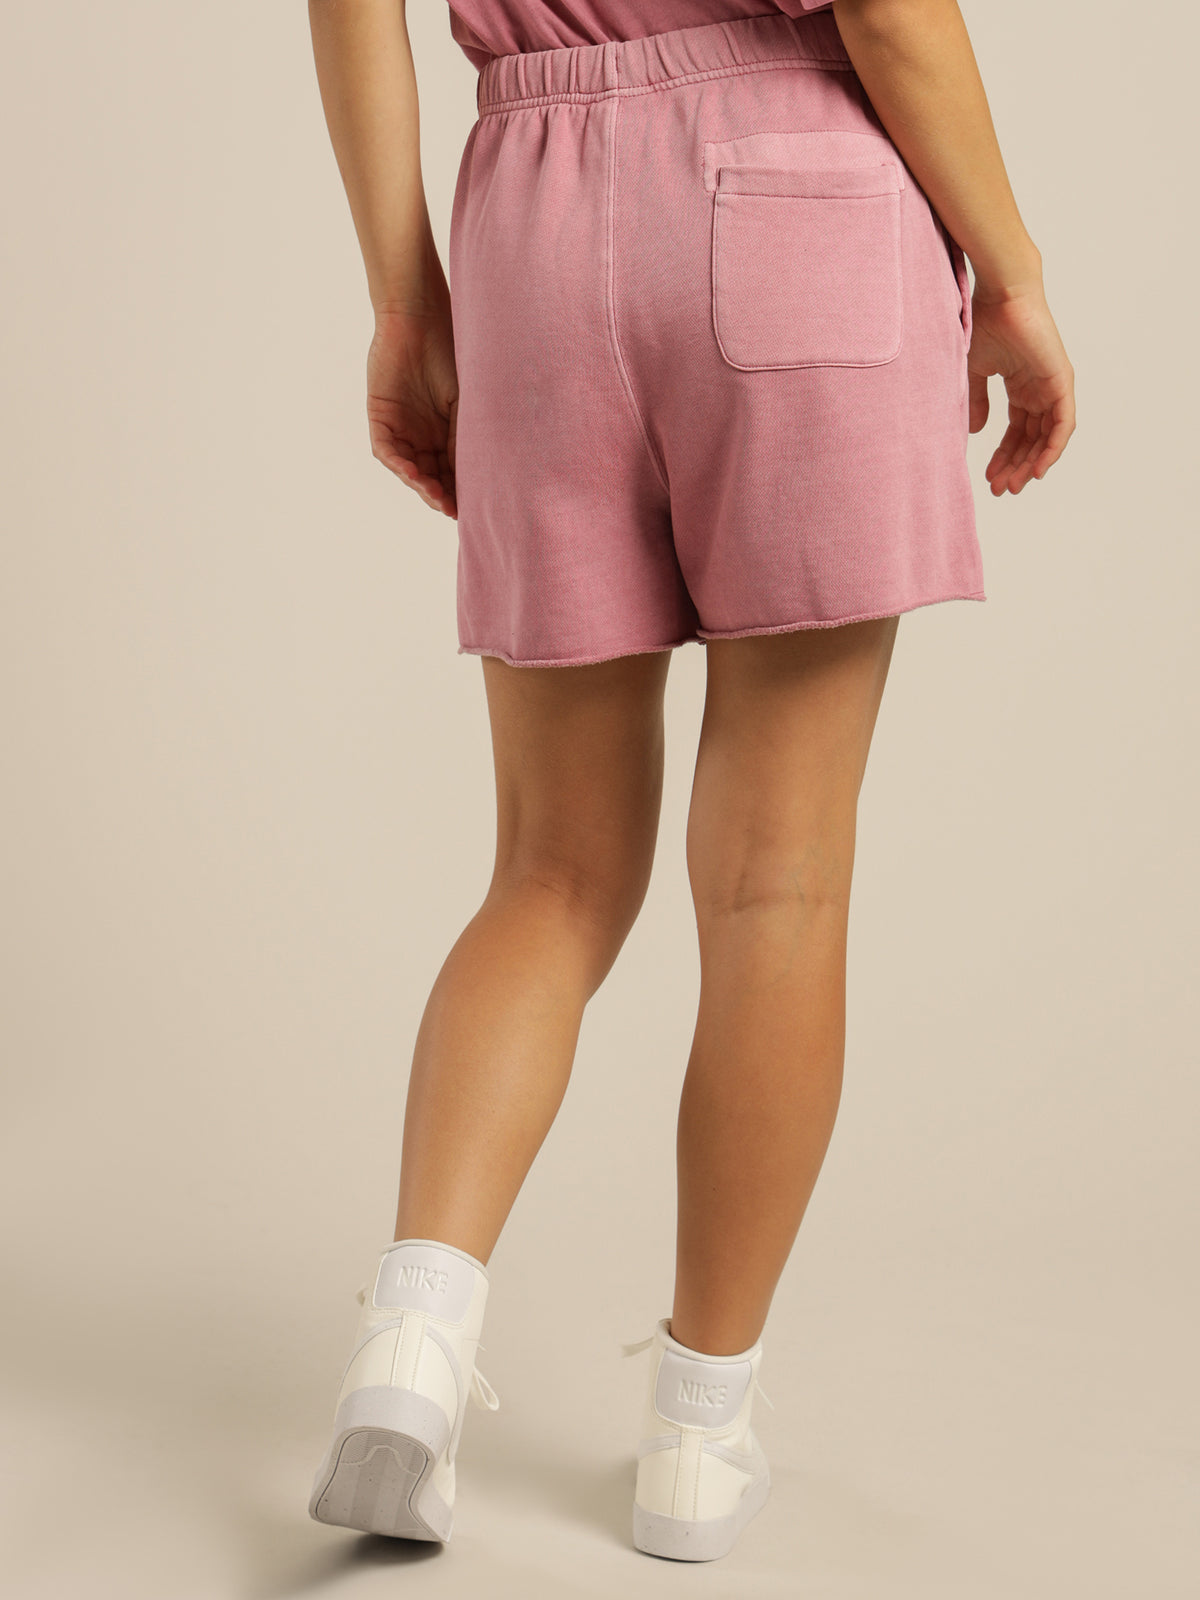 JR Vintage Dye Shorts in Terracotta Pink